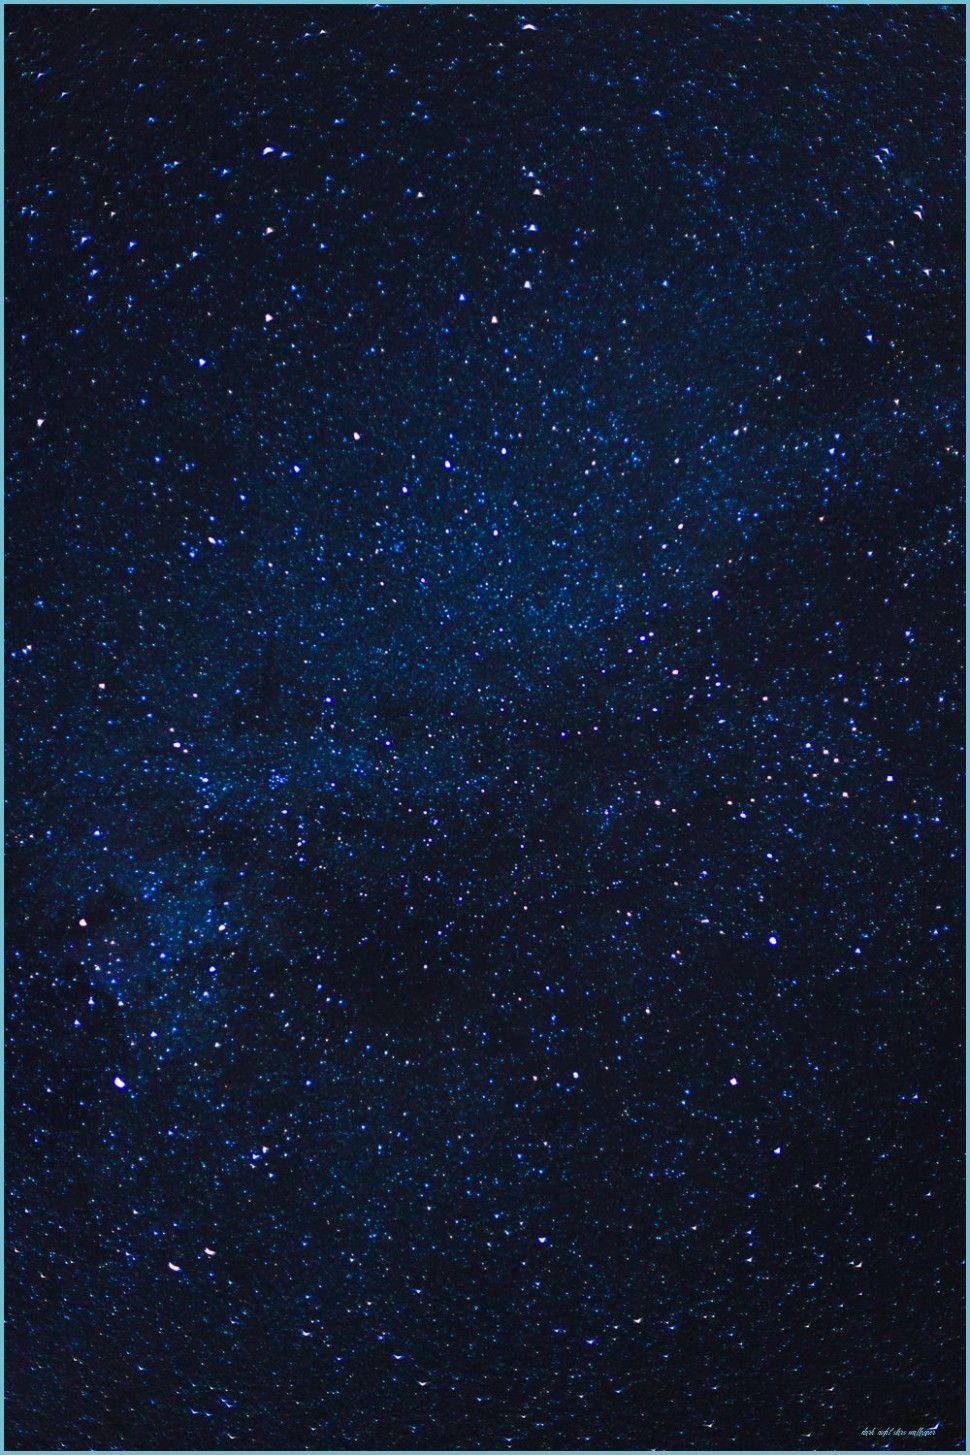 Dark Night Star Wallpapers - Top Free Dark Night Star Backgrounds ...